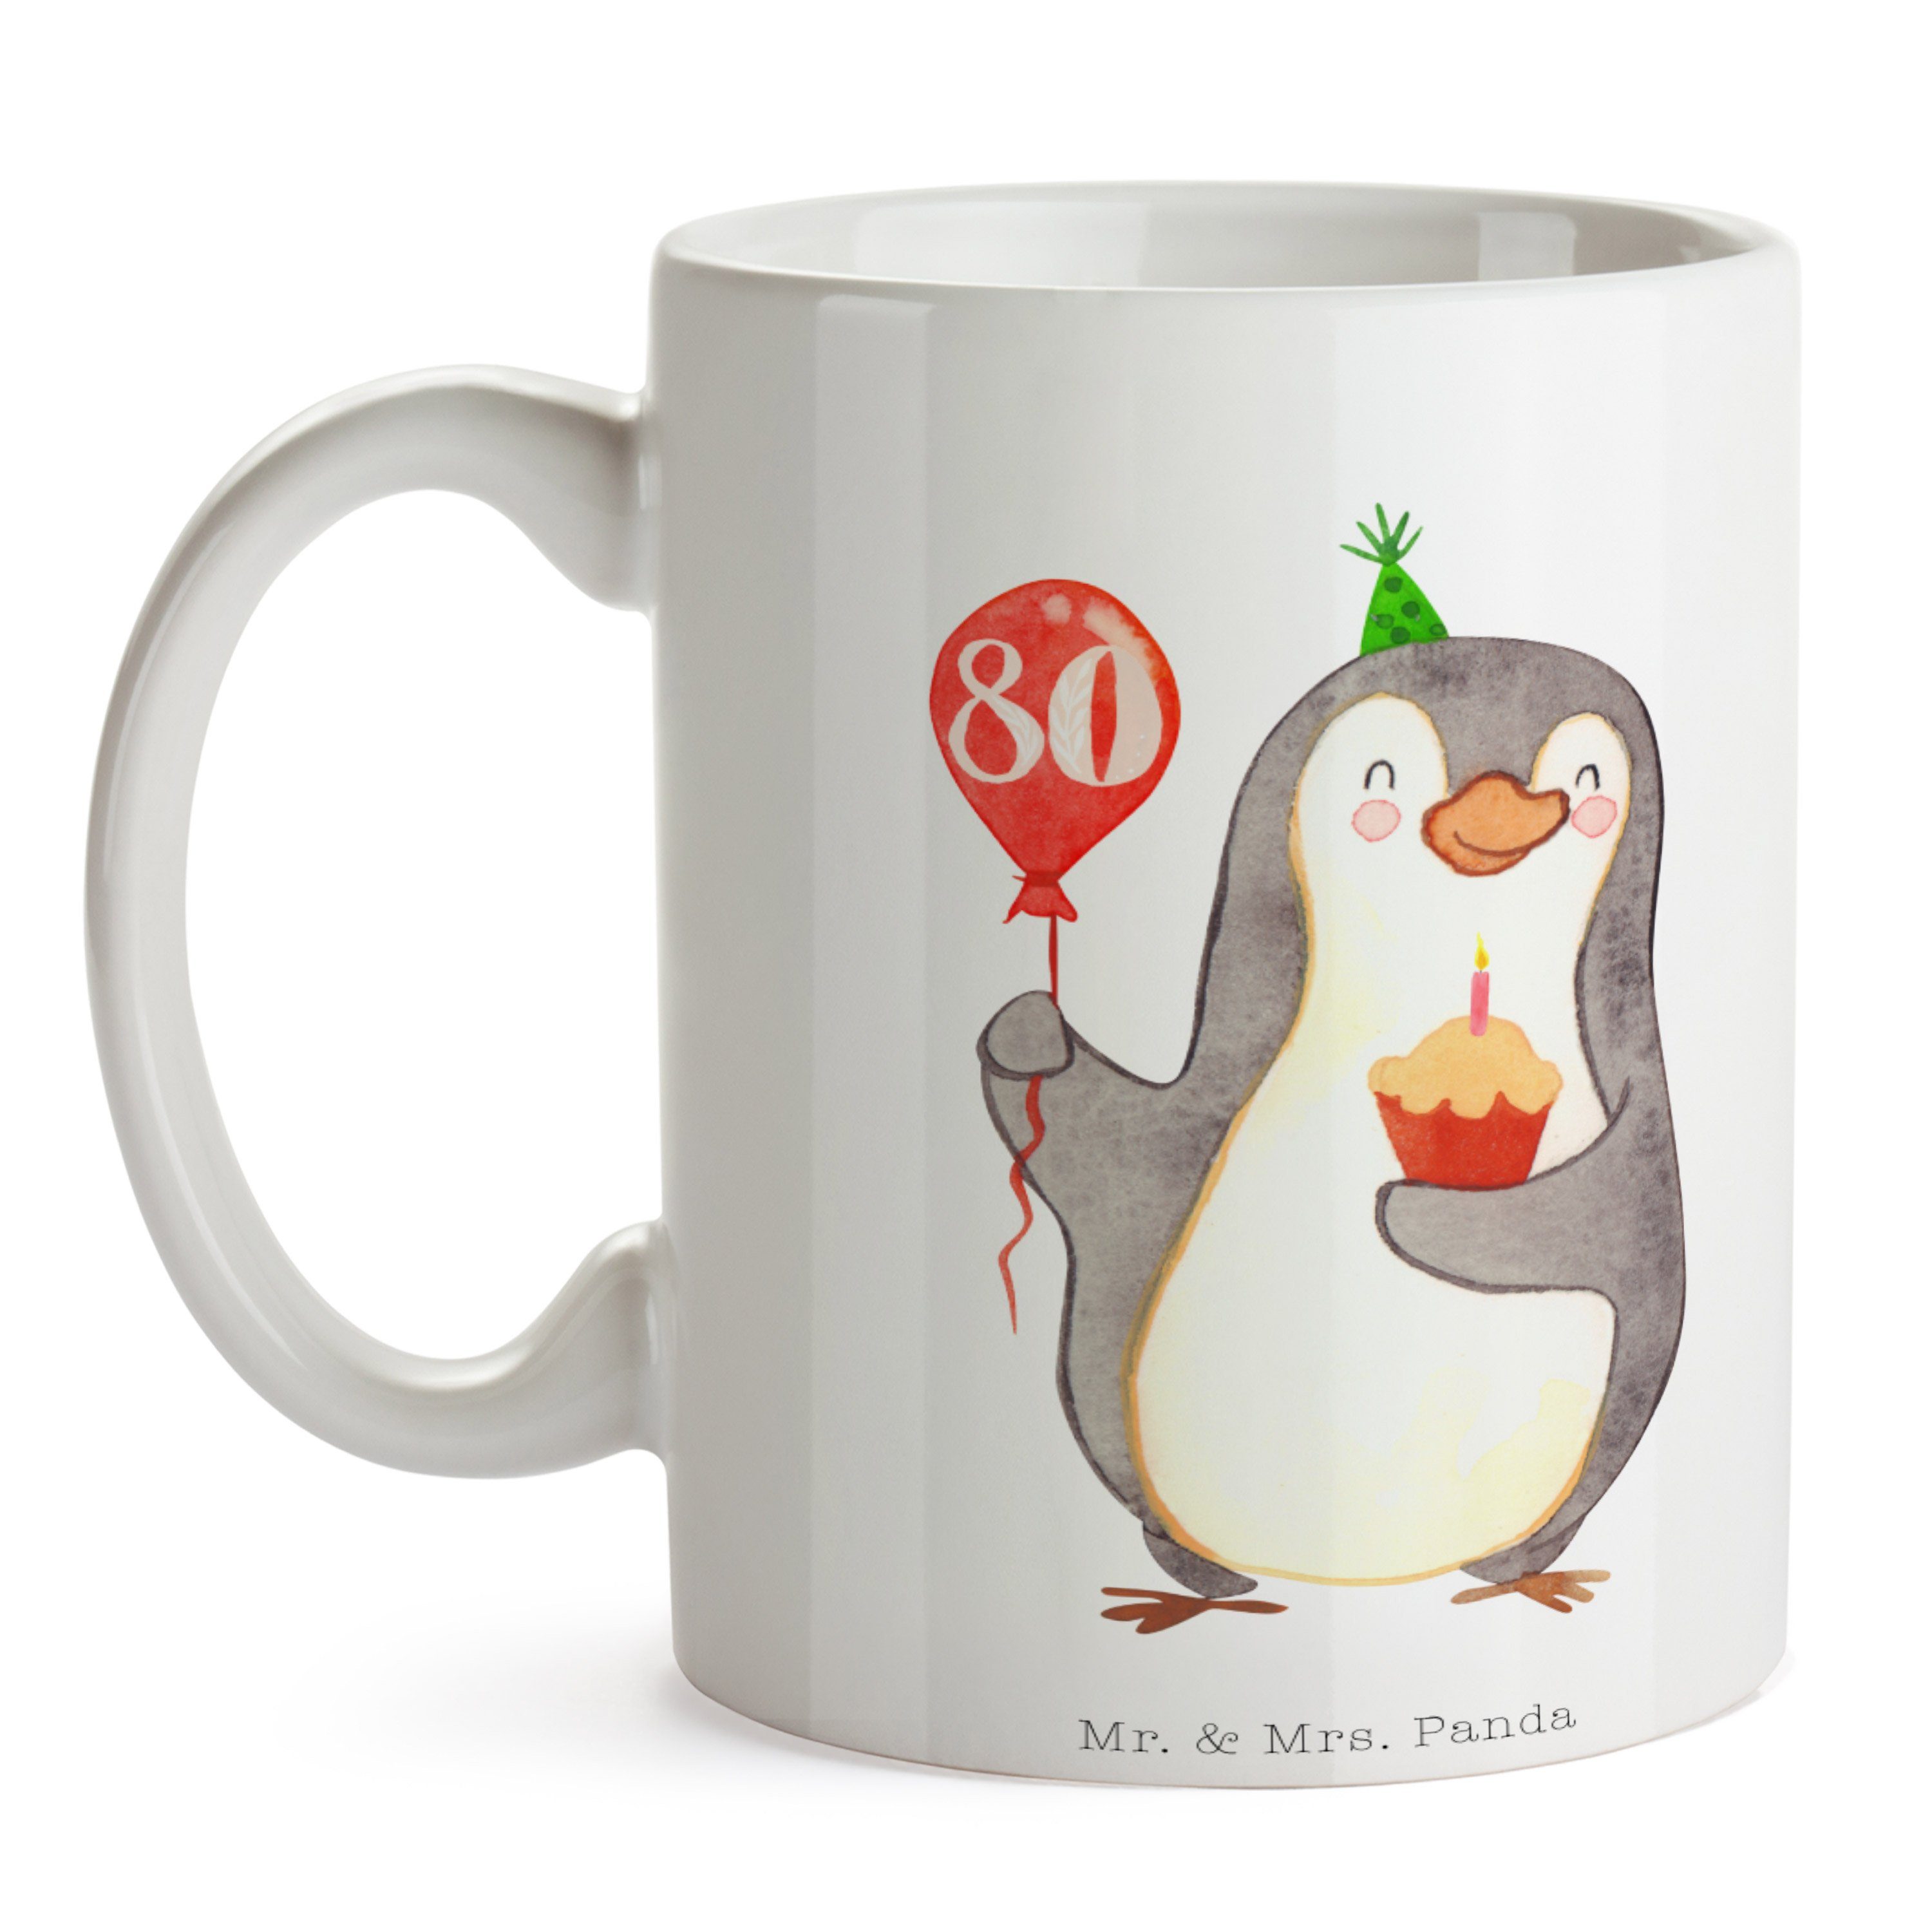 Mr. & Mrs. Panda Tasse - Geburtstag Geburt, Weiß Luftballon Geschenk, Teetasse, Pinguin Keramik - 80